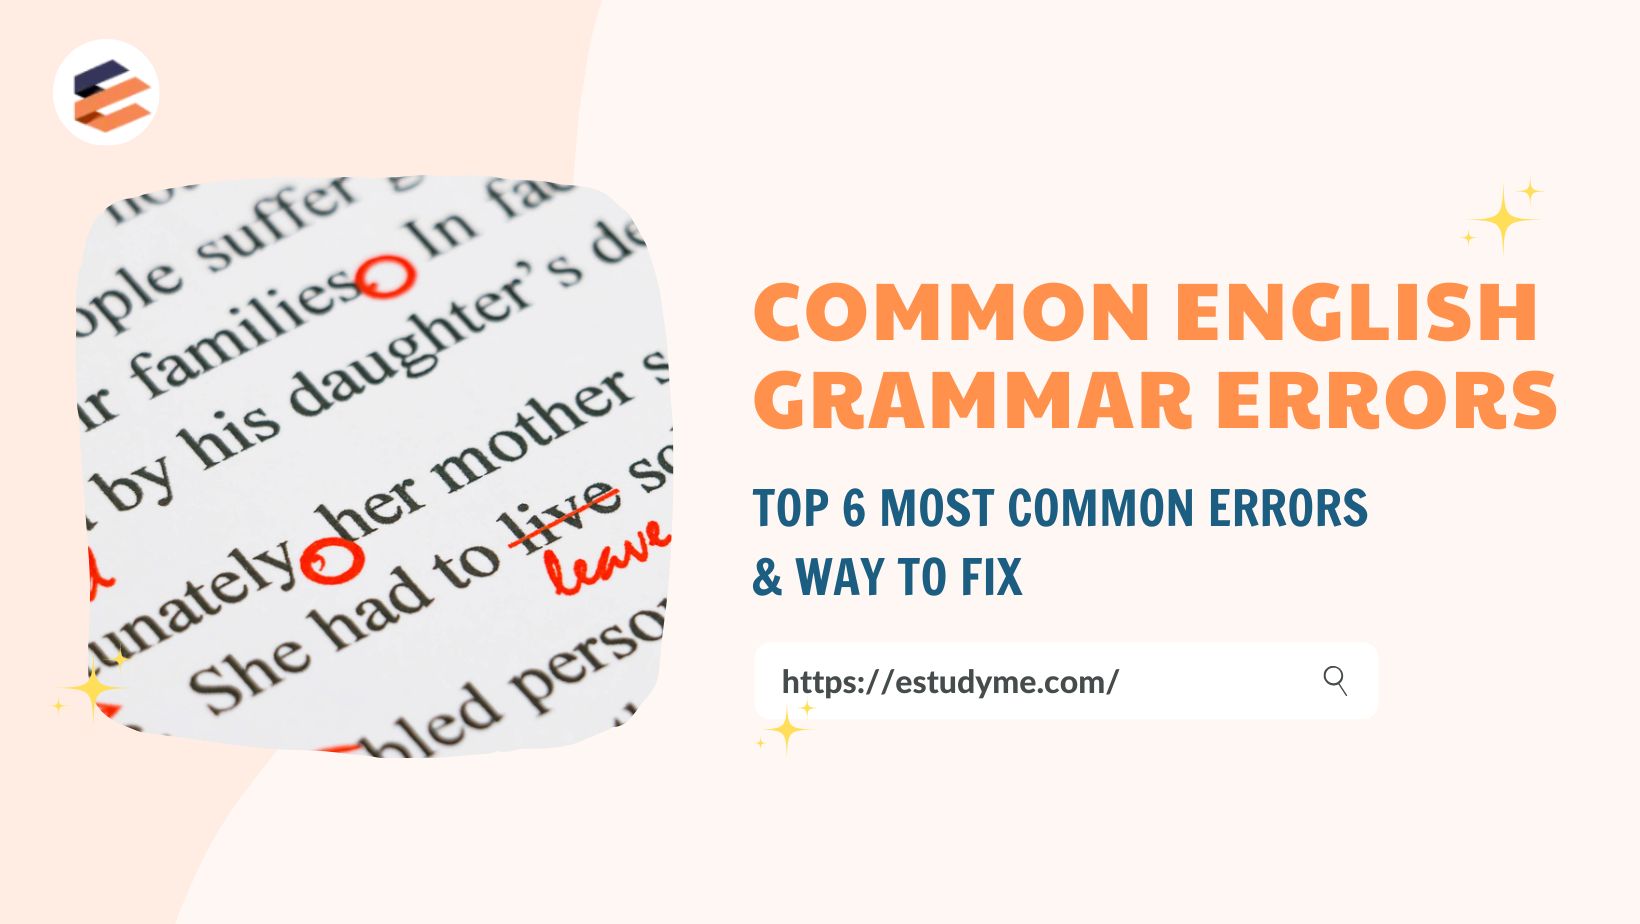 Common English grammar errors and ways to avoid them